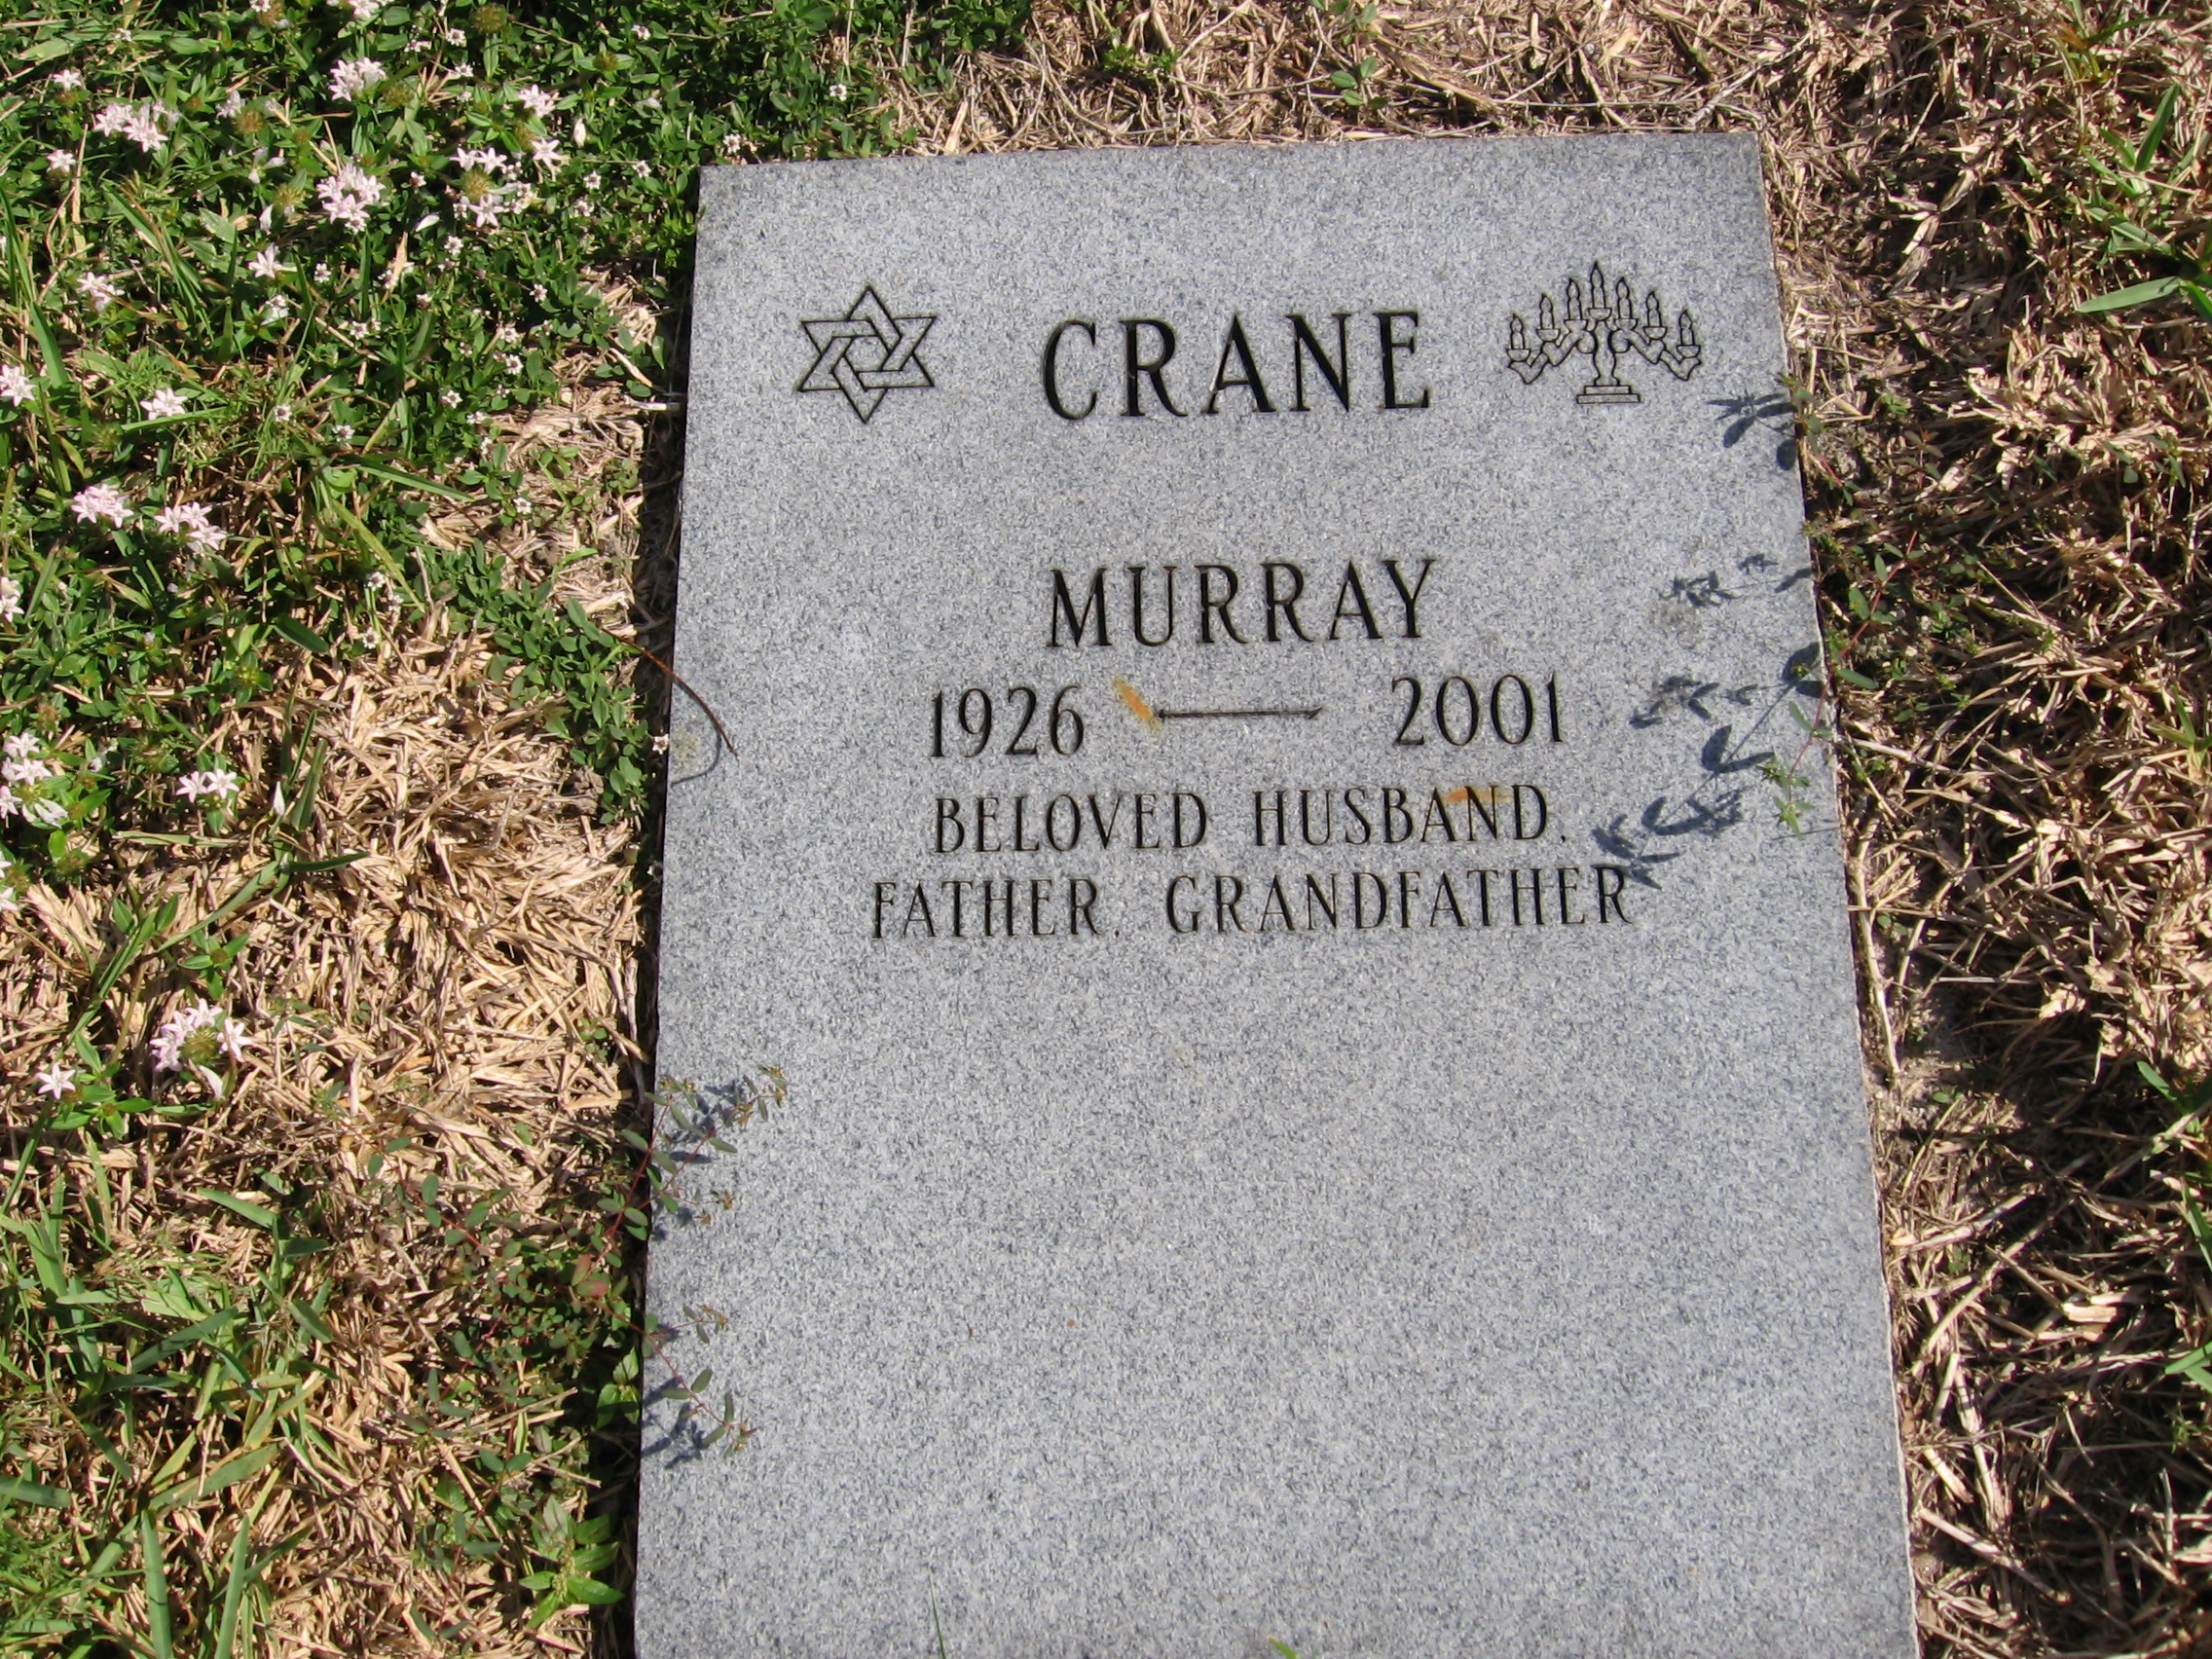 Murray Crane